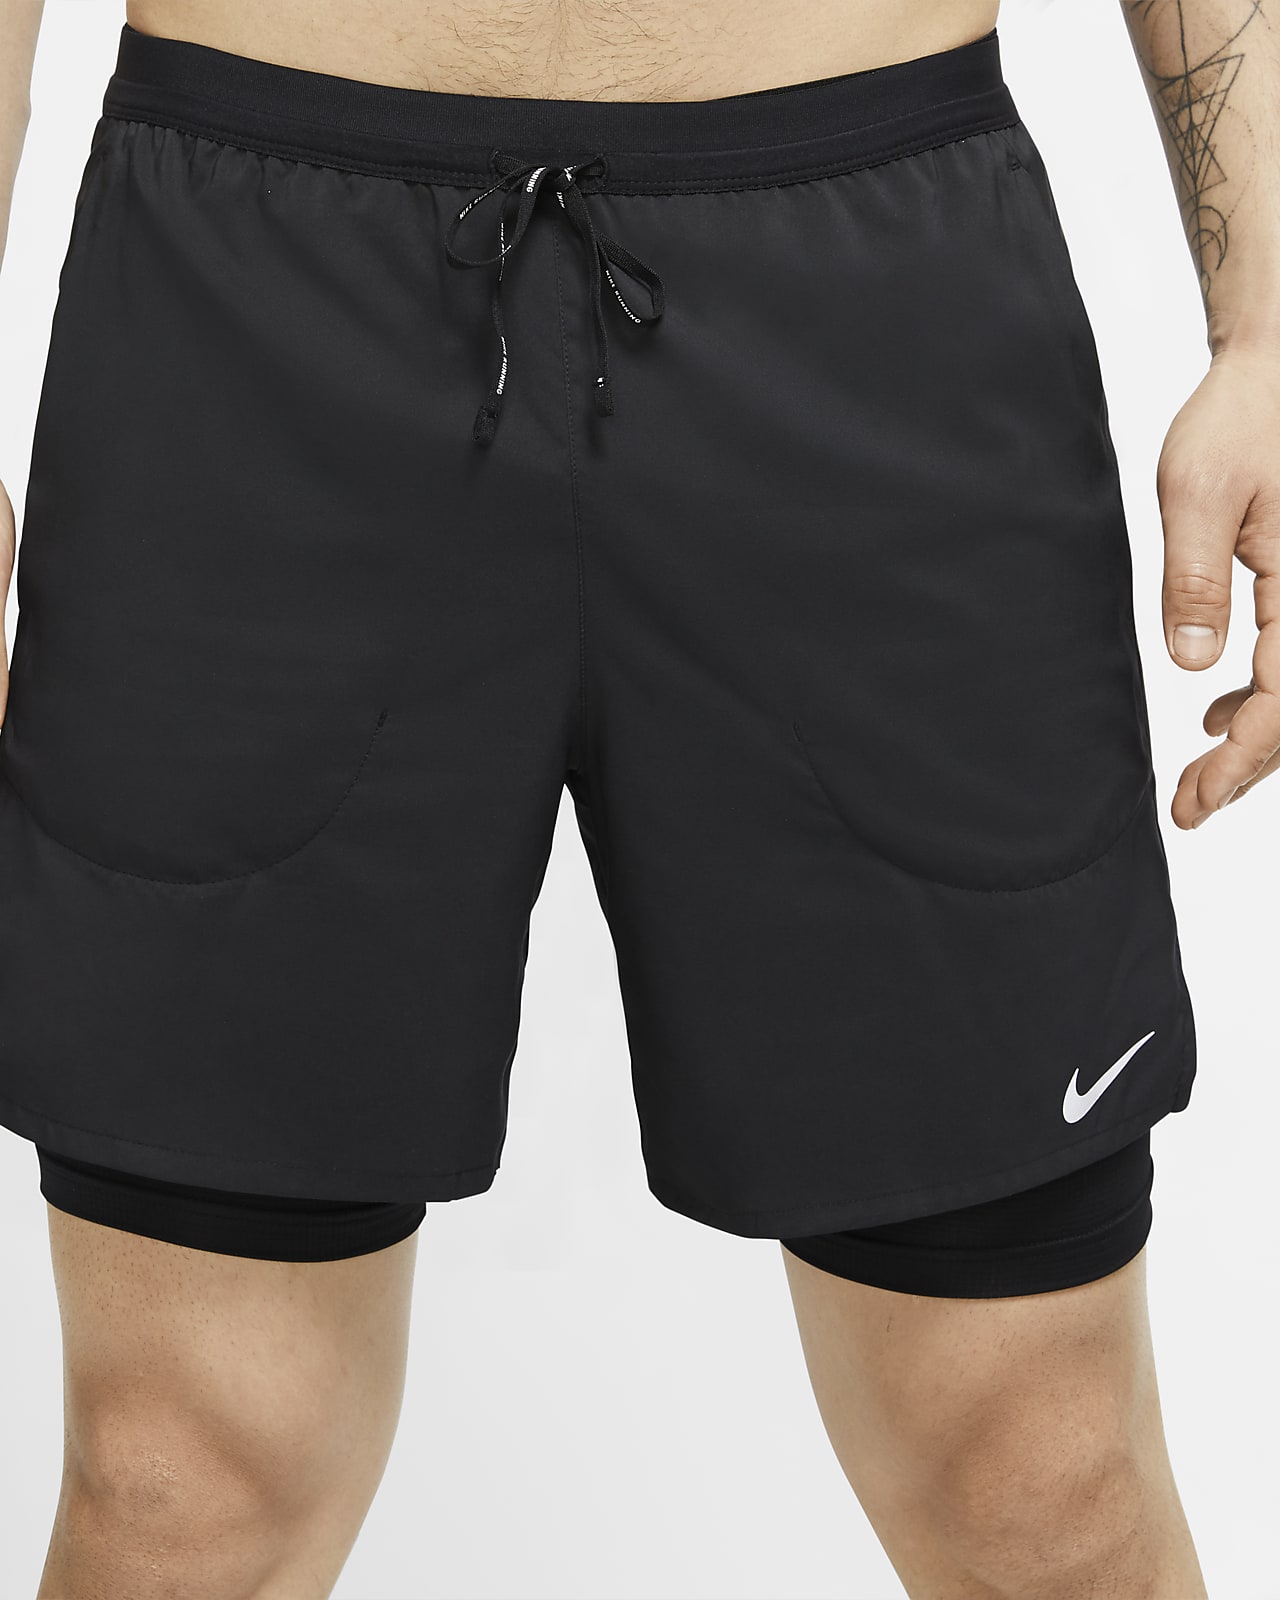 nike running flex stride 7 inch shorts in black